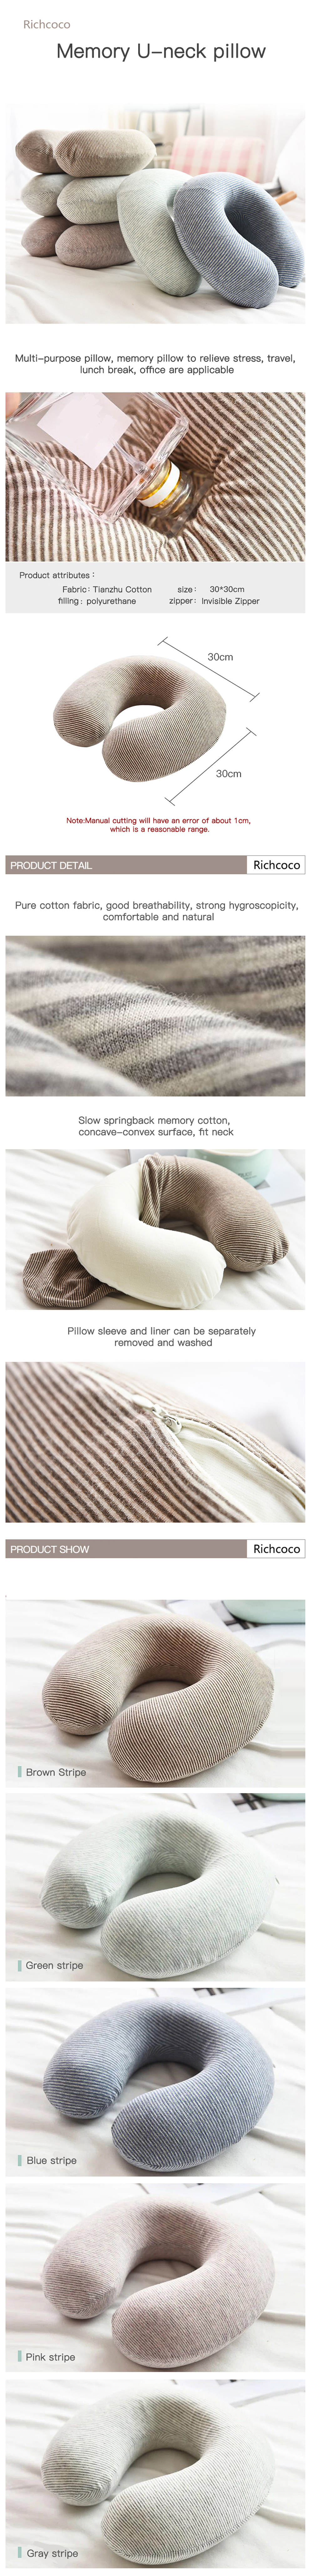 Memory cotton U-shaped neck pillow cotton fabric chronic elastic memory cotton